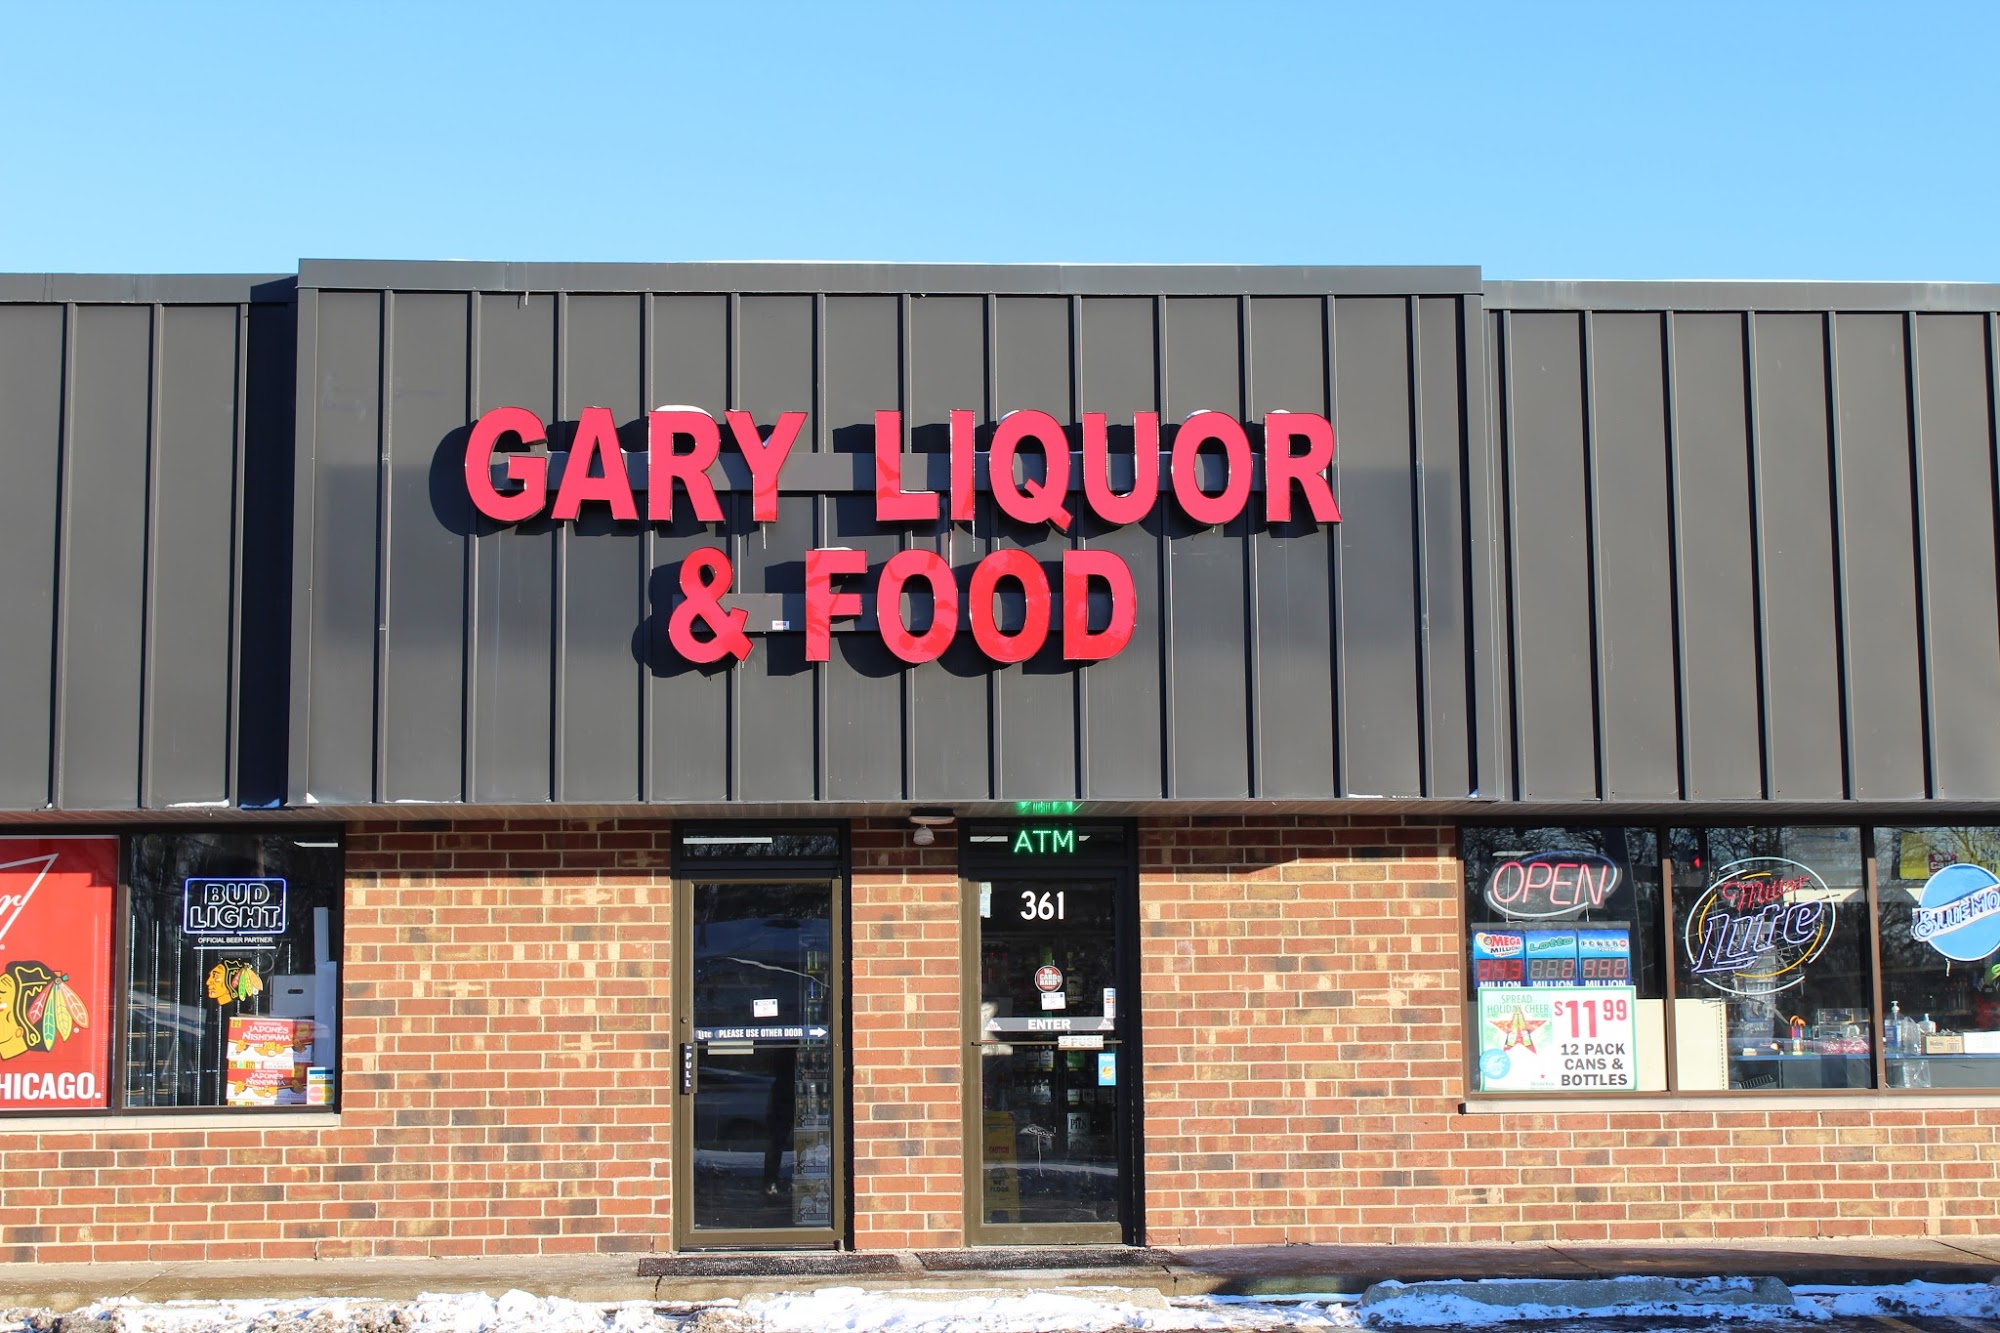 Gary Liquor and Food